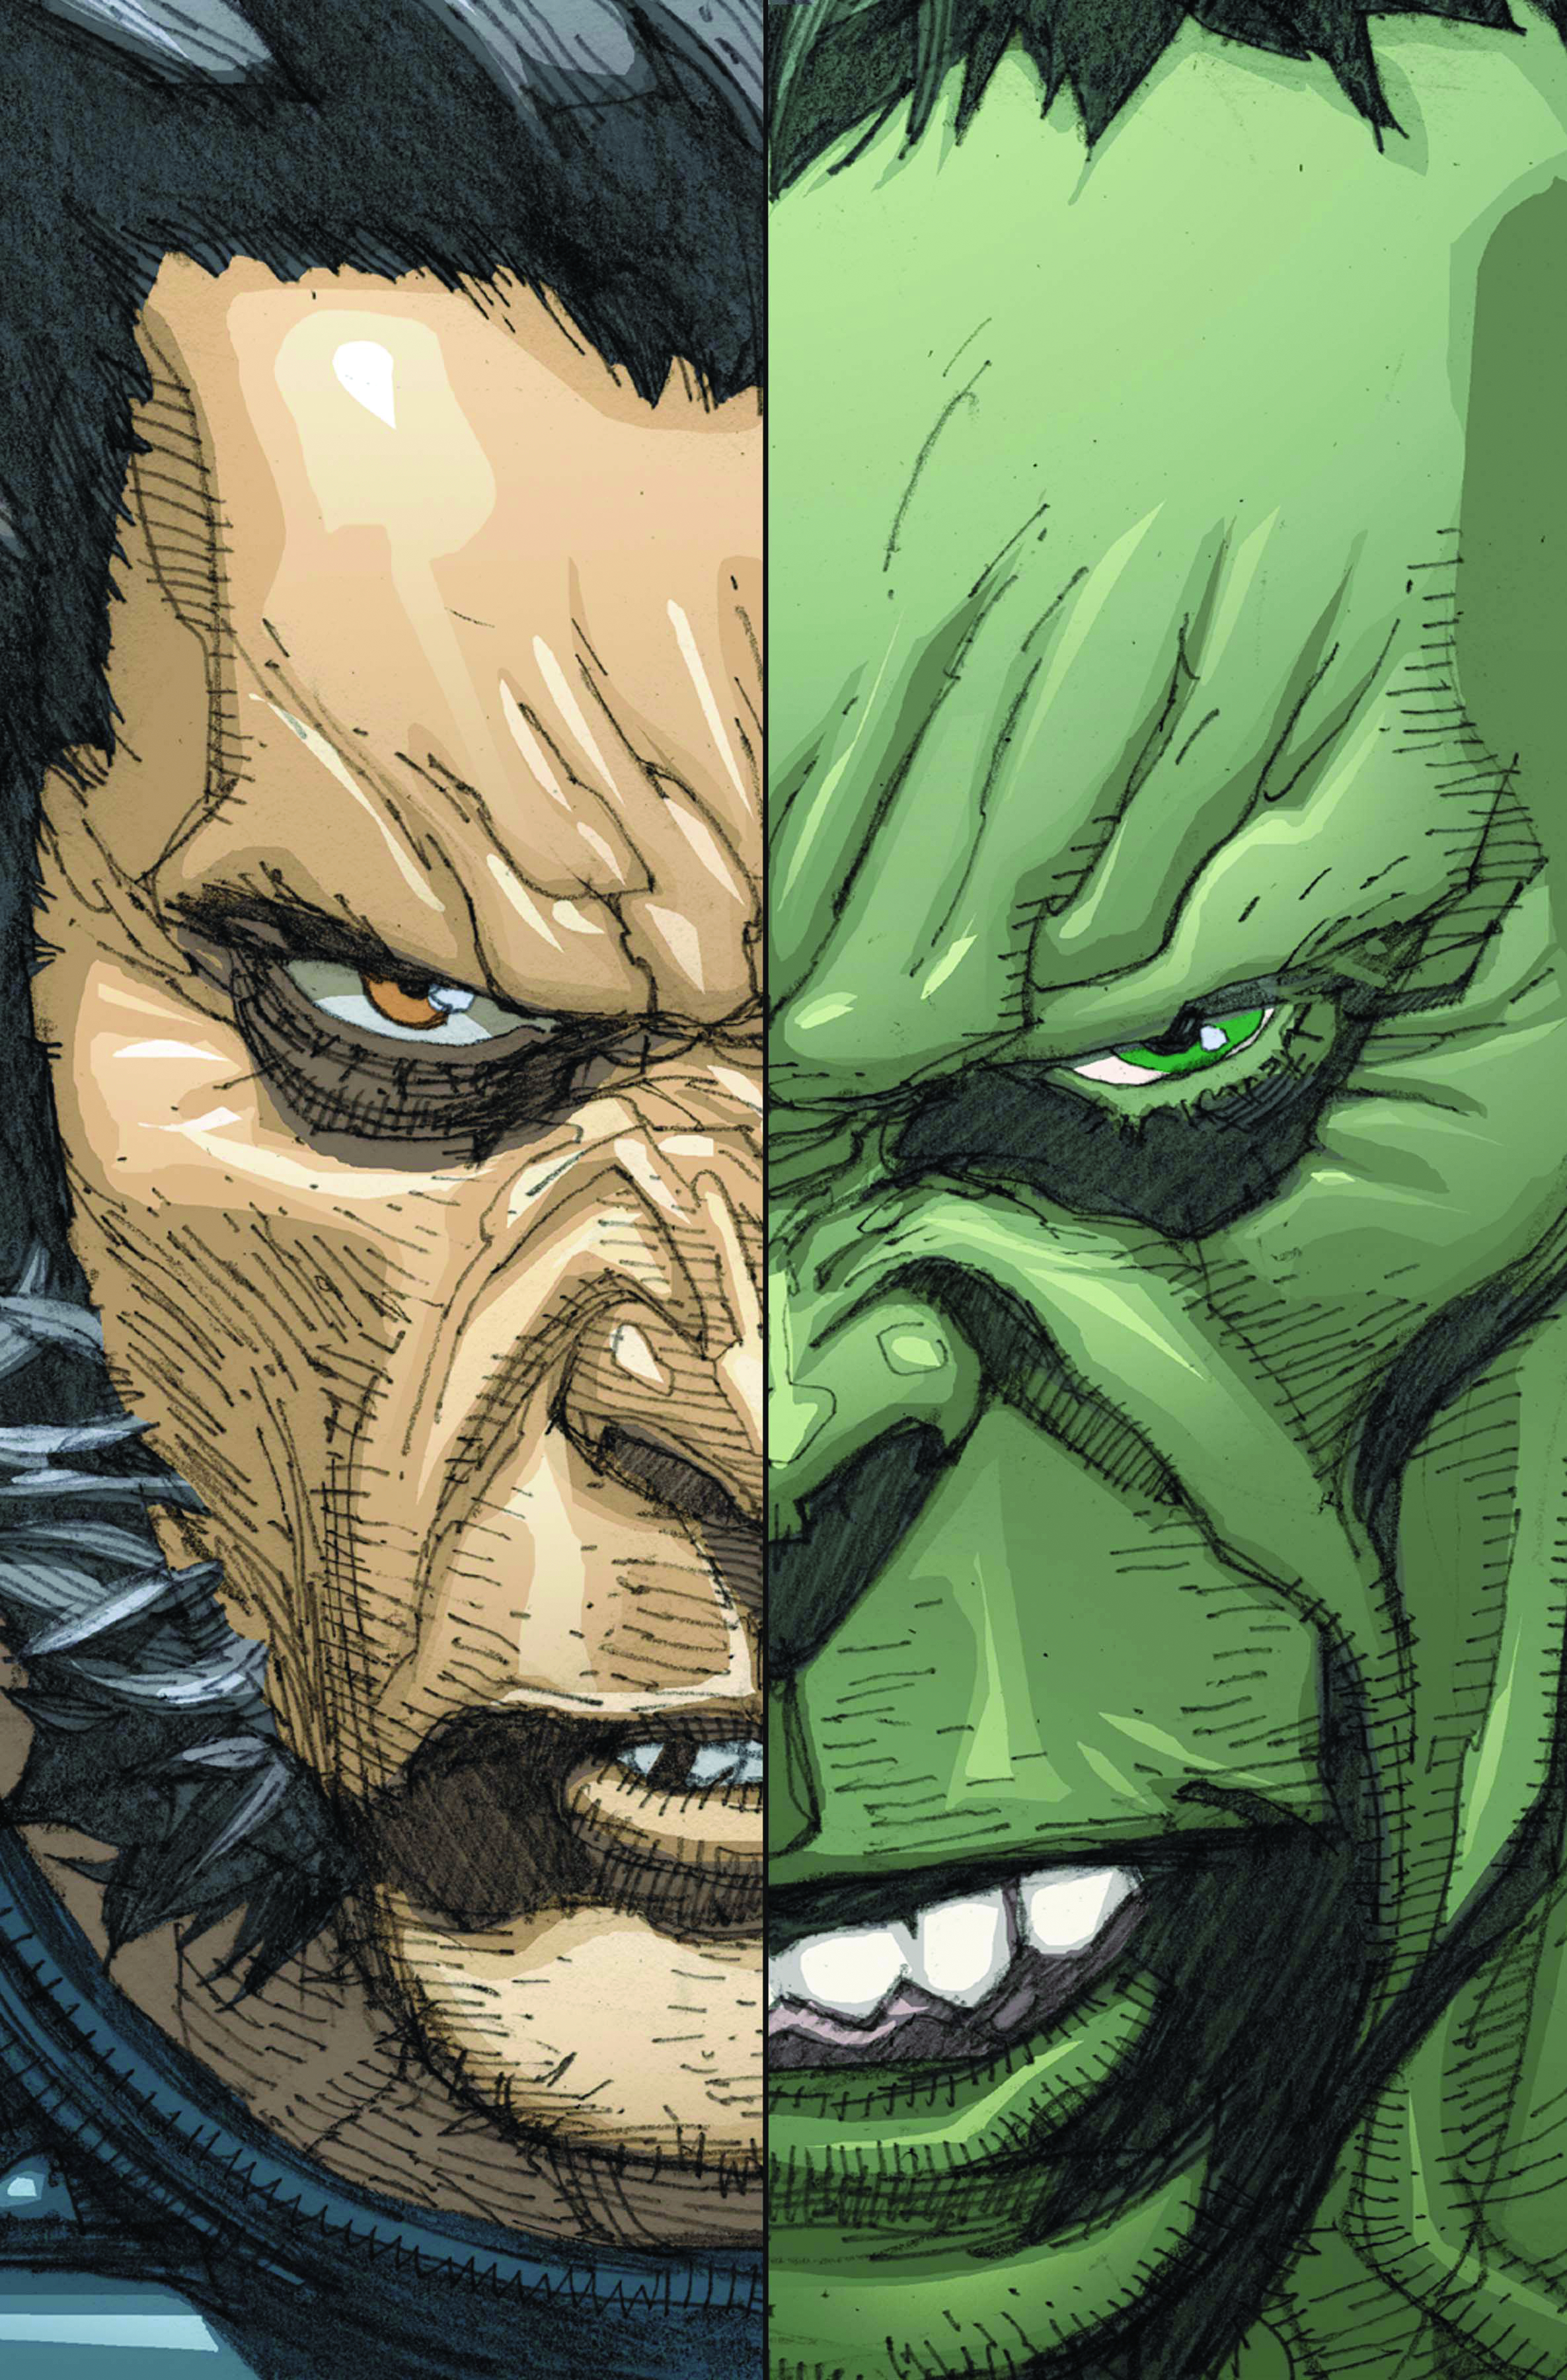 Wolverine Vs Hulk Wallpapers